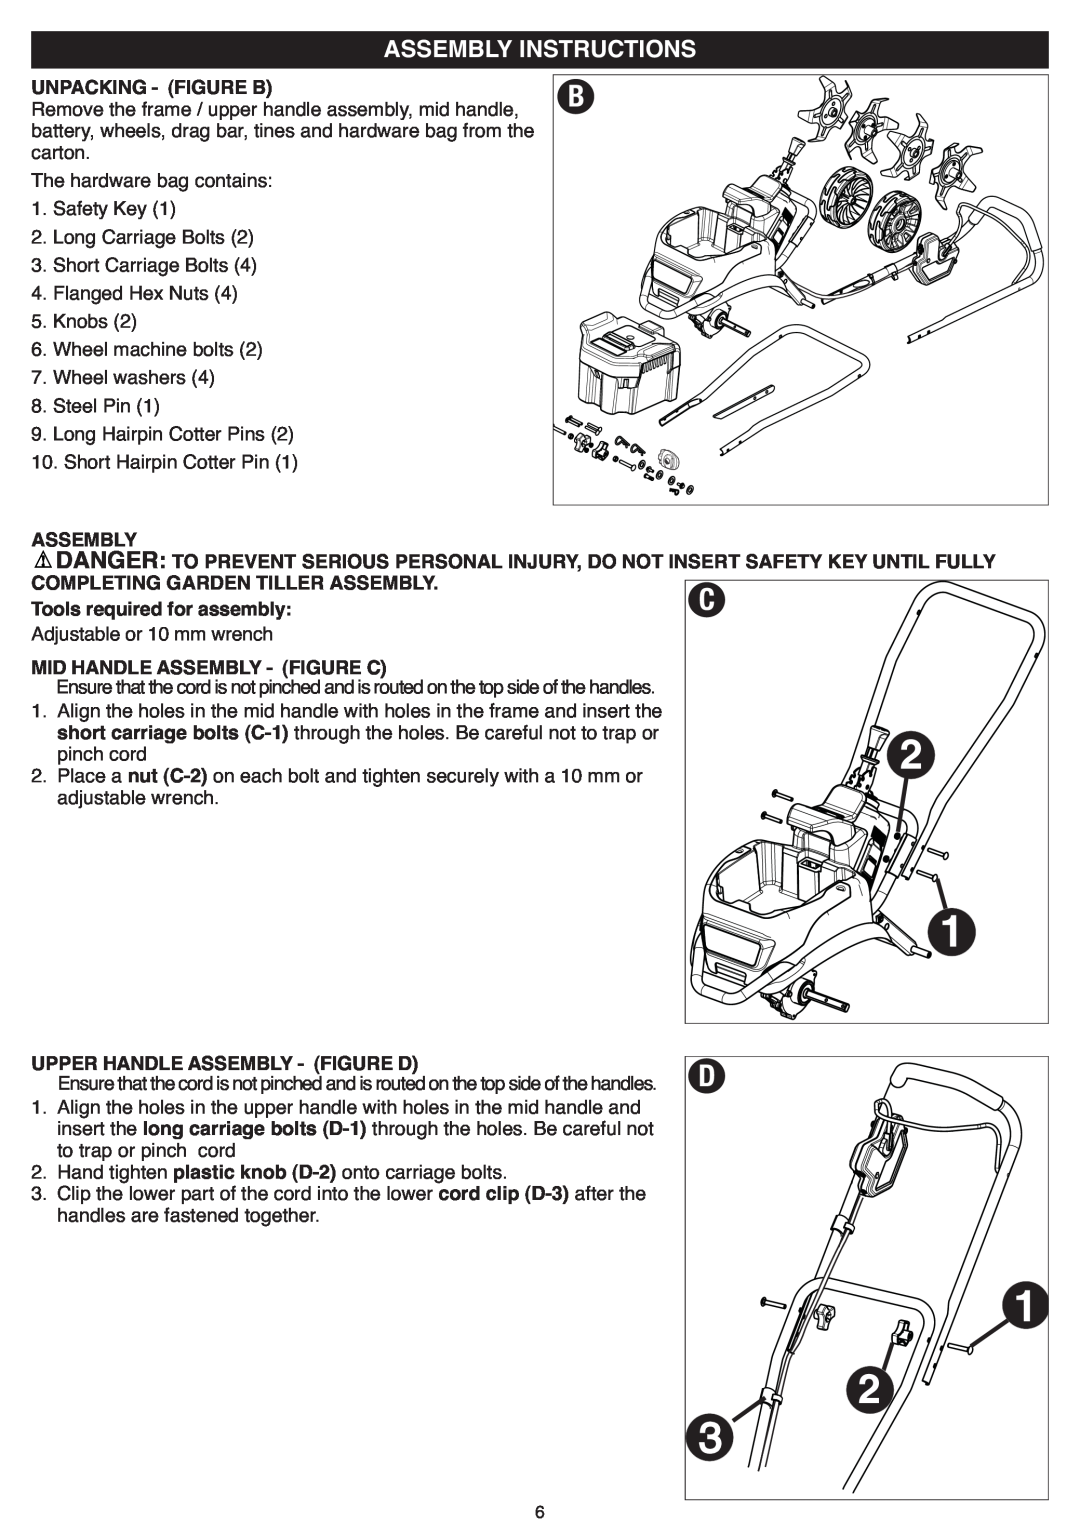 Black & Decker CTL36 instruction manual Assembly Instructions, Unpacking - Figure B, Completing Garden Tiller Assembly 